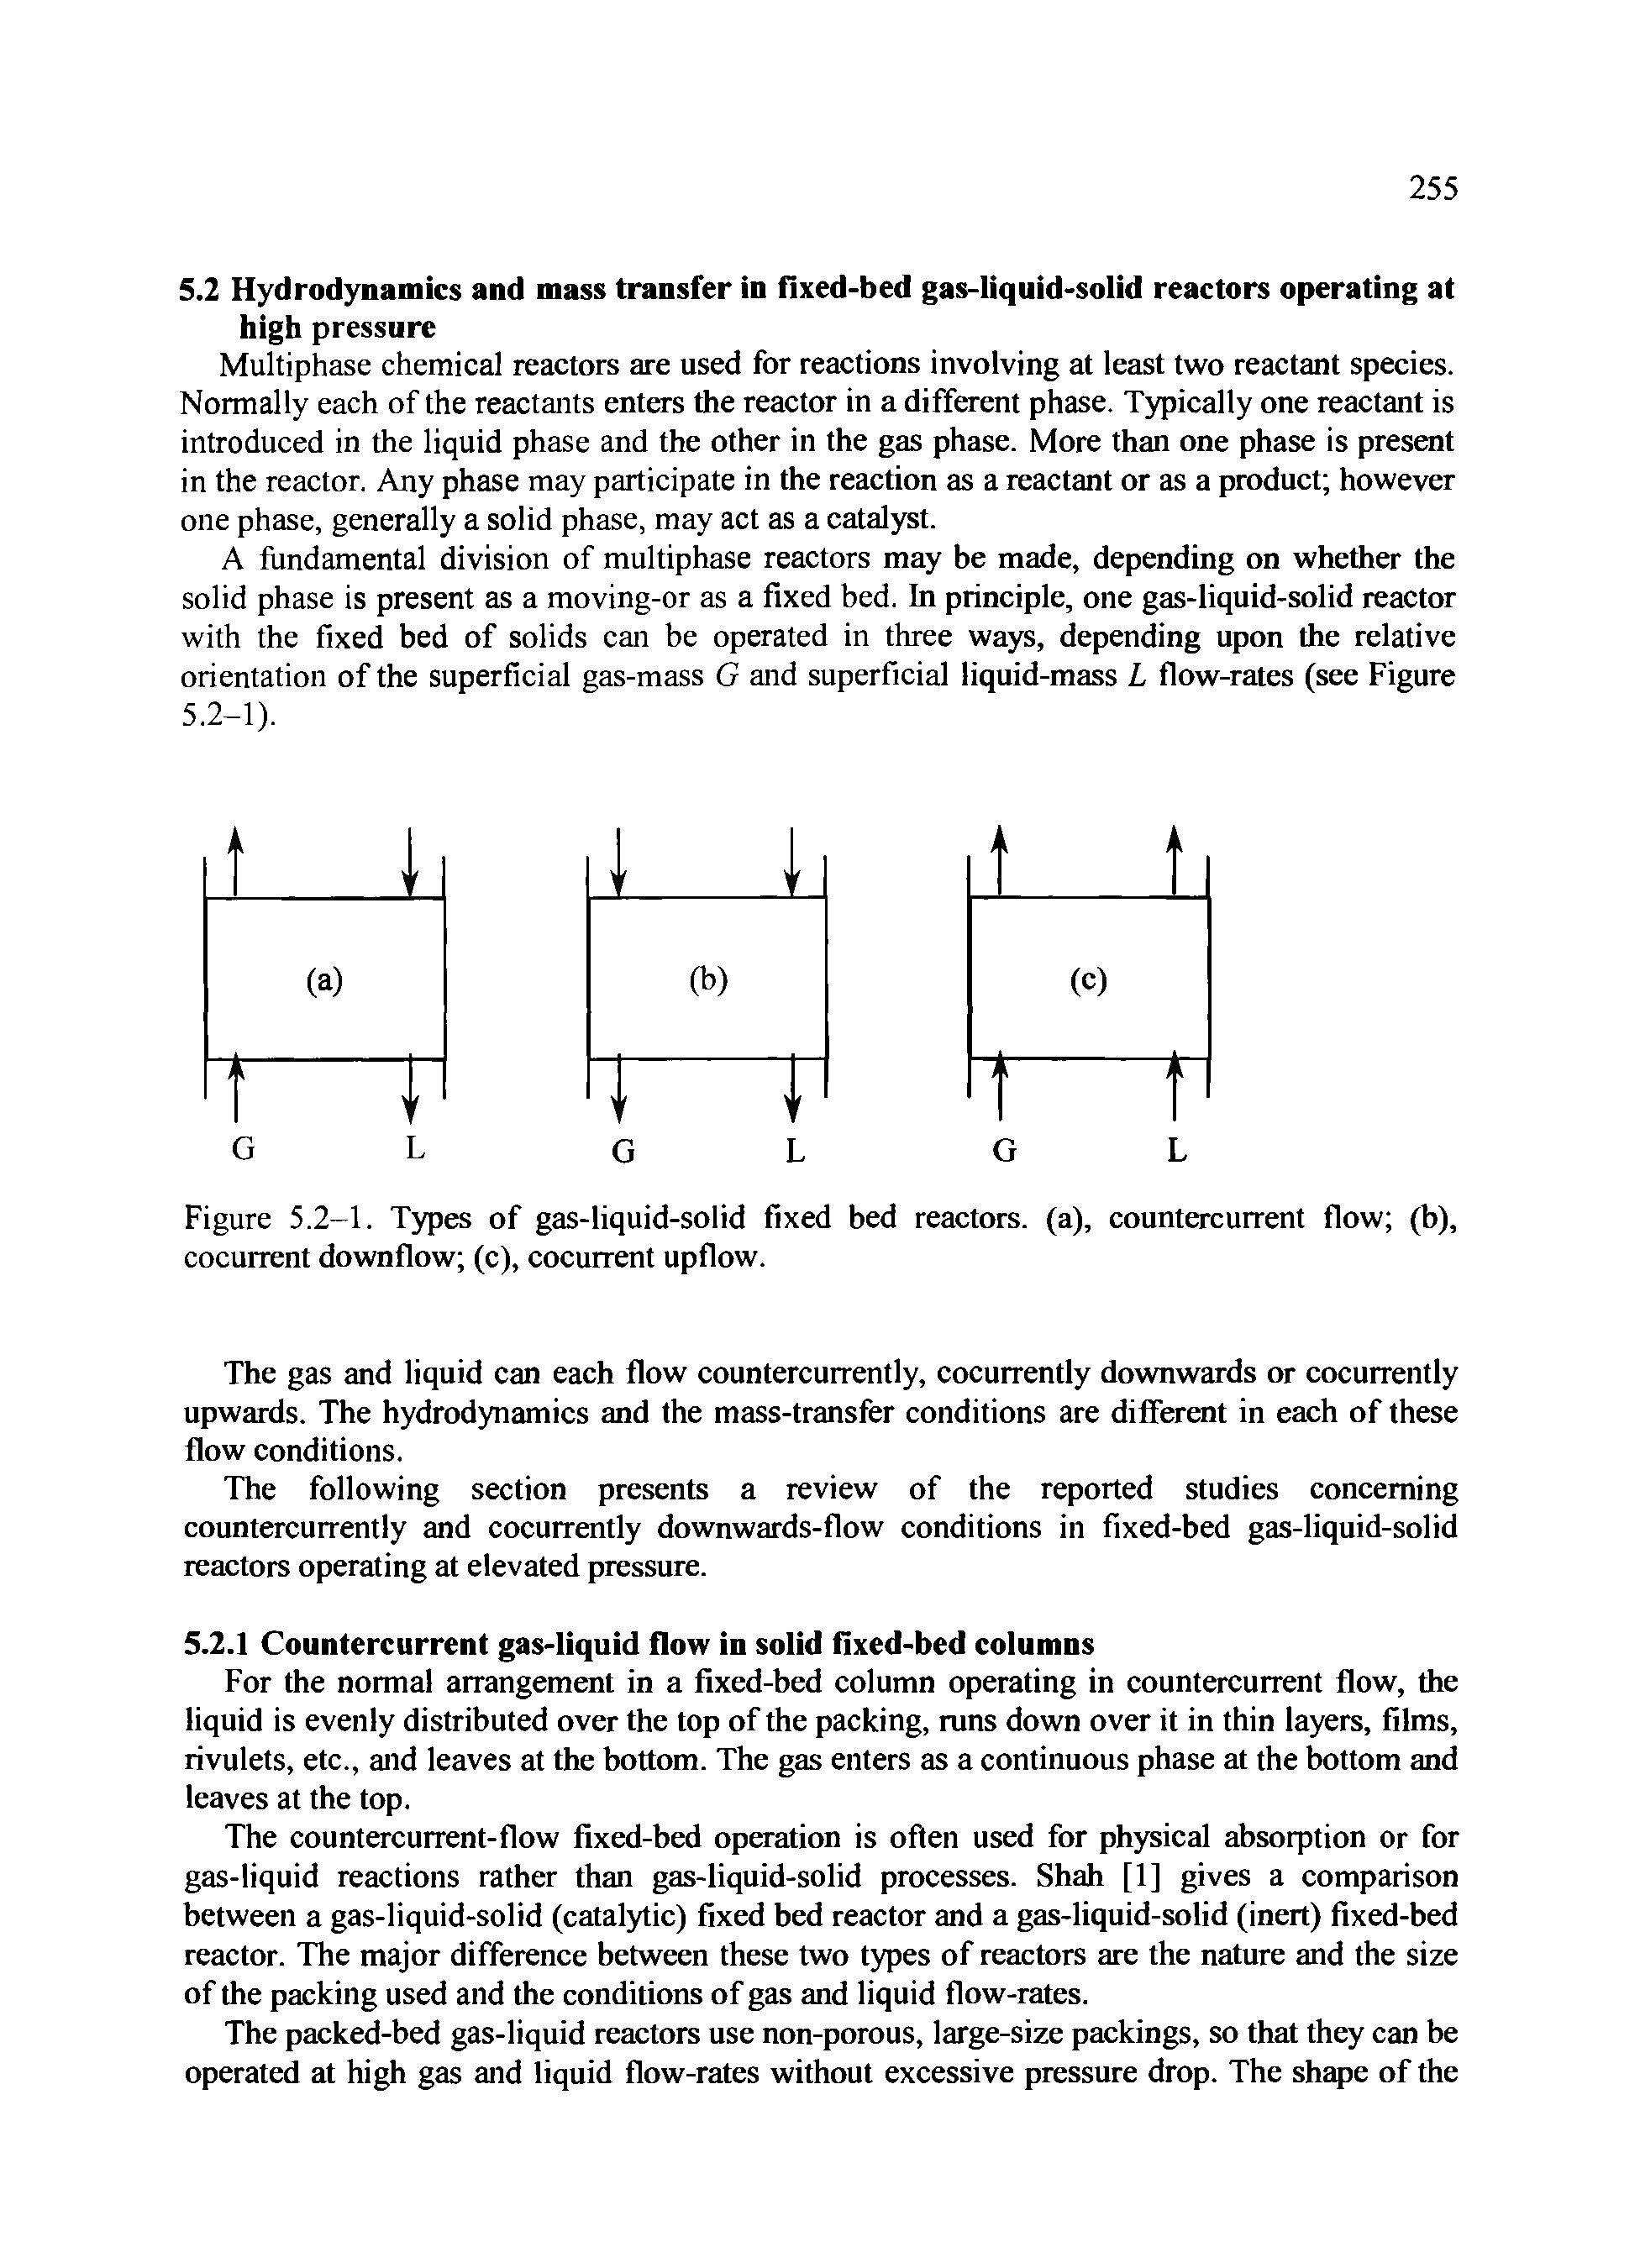 Figure 5.2-1. Types of gas-liquid-solid fixed bed reactors, (a), countercurrent flow (b), cocurrent downflow (c), cocurrent upflow.